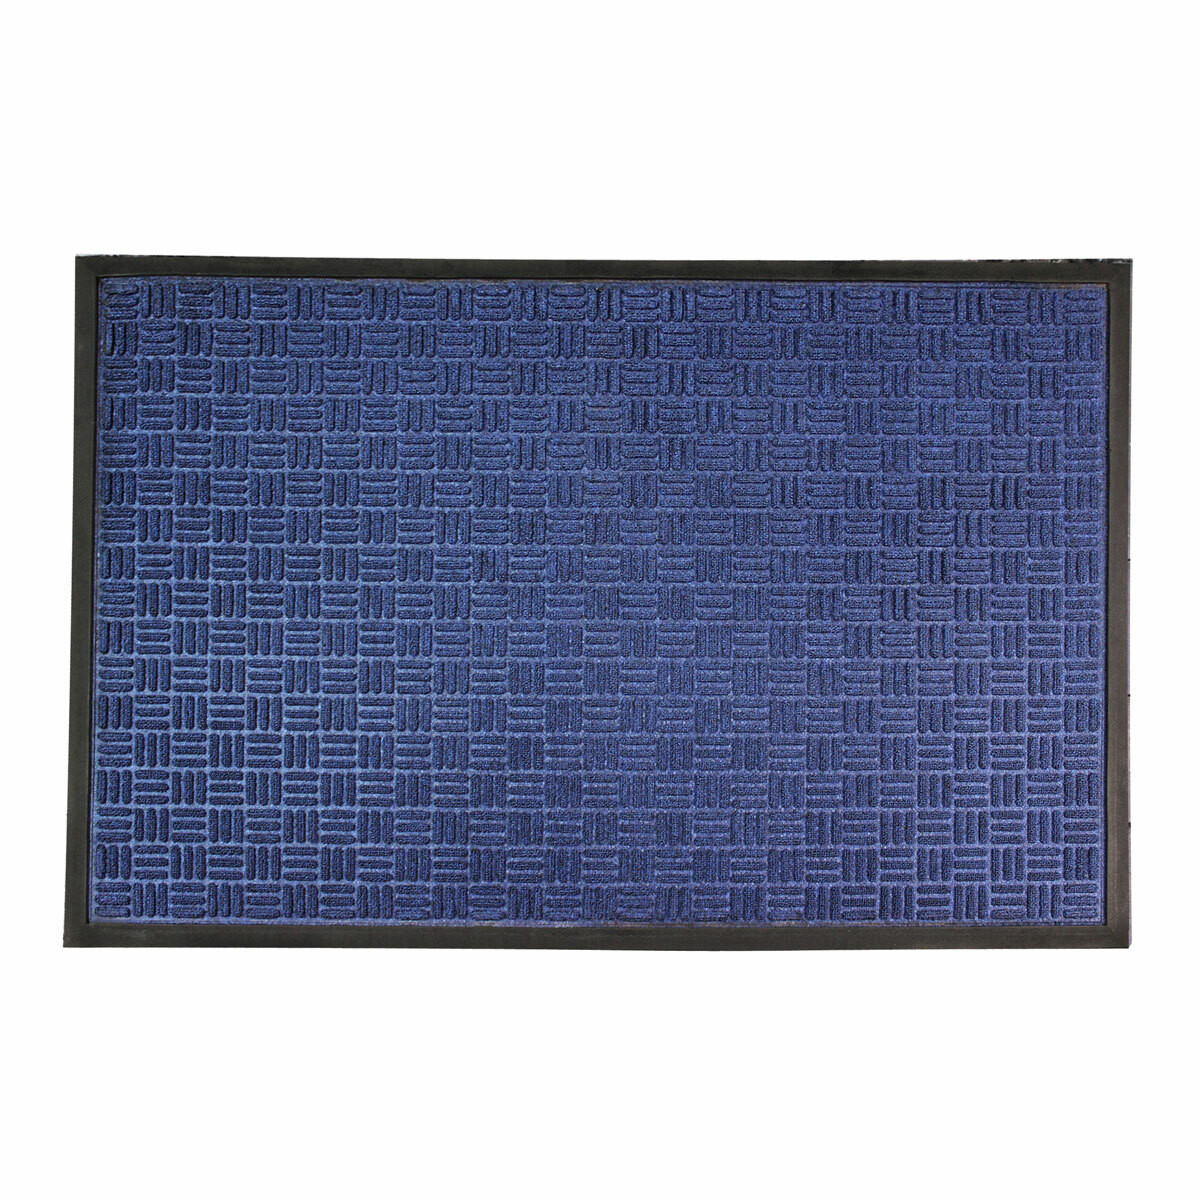 Zoeey Commercial Non-Slip Outdoor Door Mat Latitude Run Mat Size: 72 x 48, Color: Blue